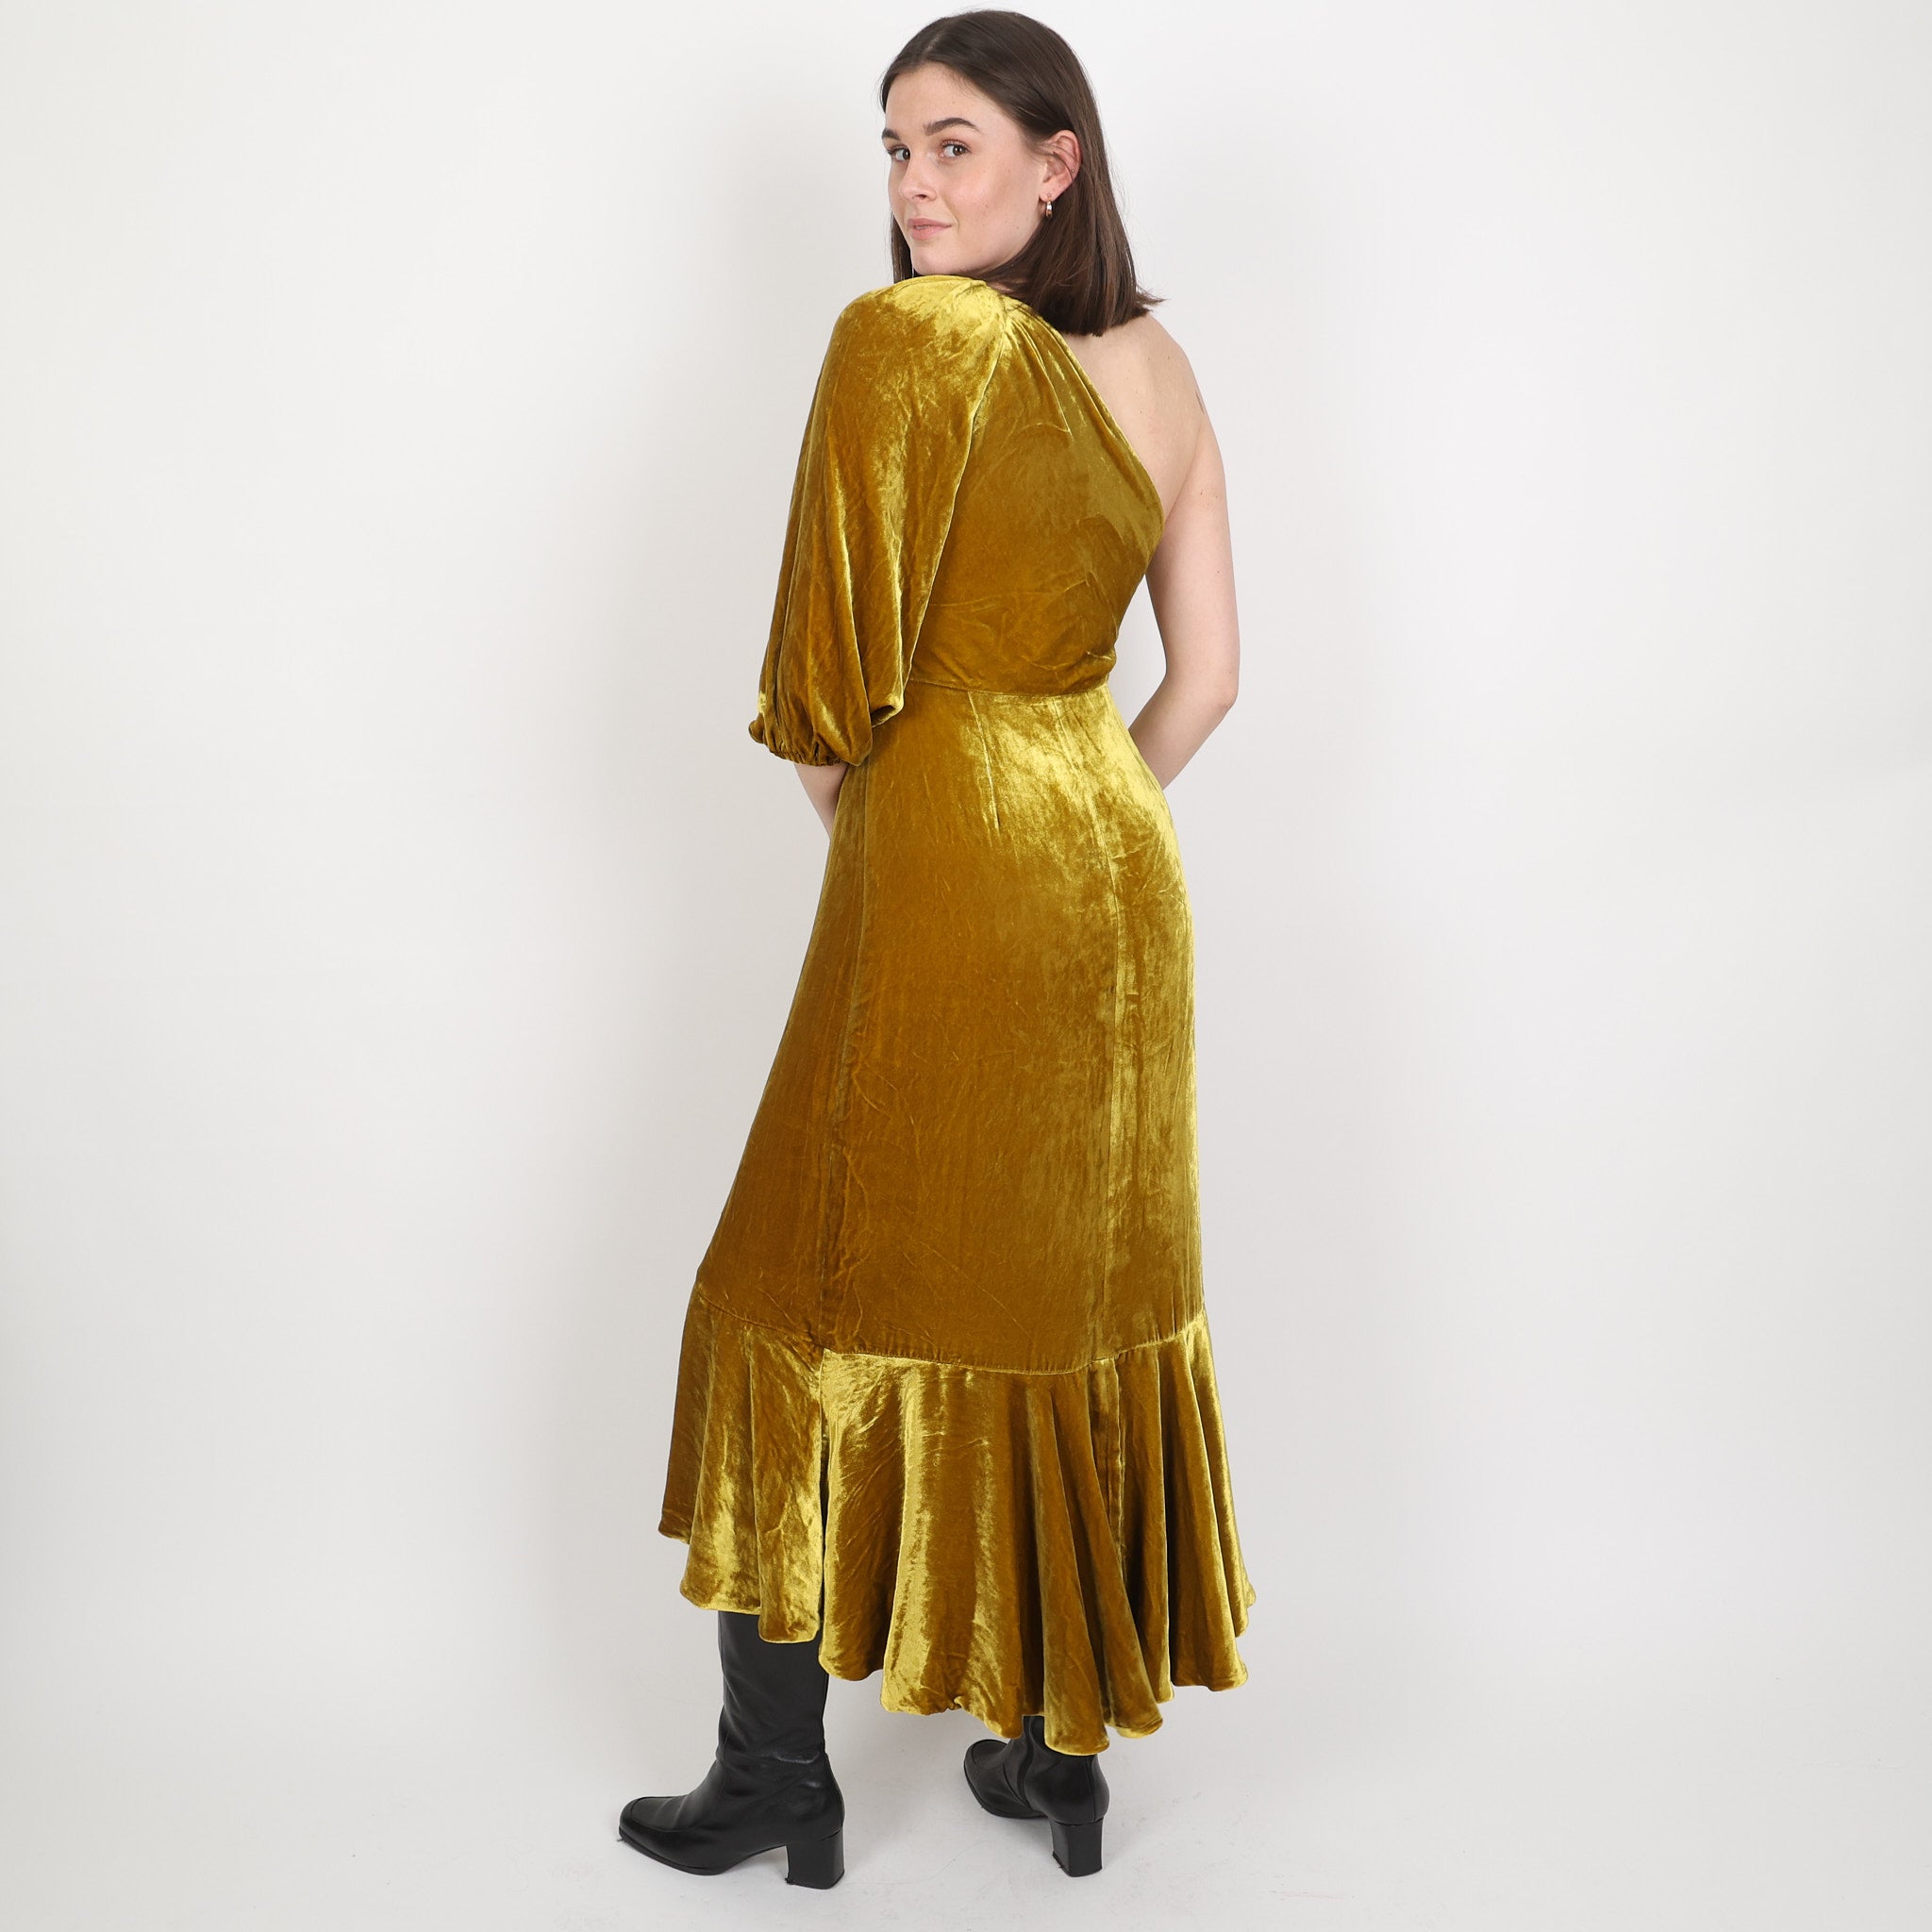 Dress, UK Size 12